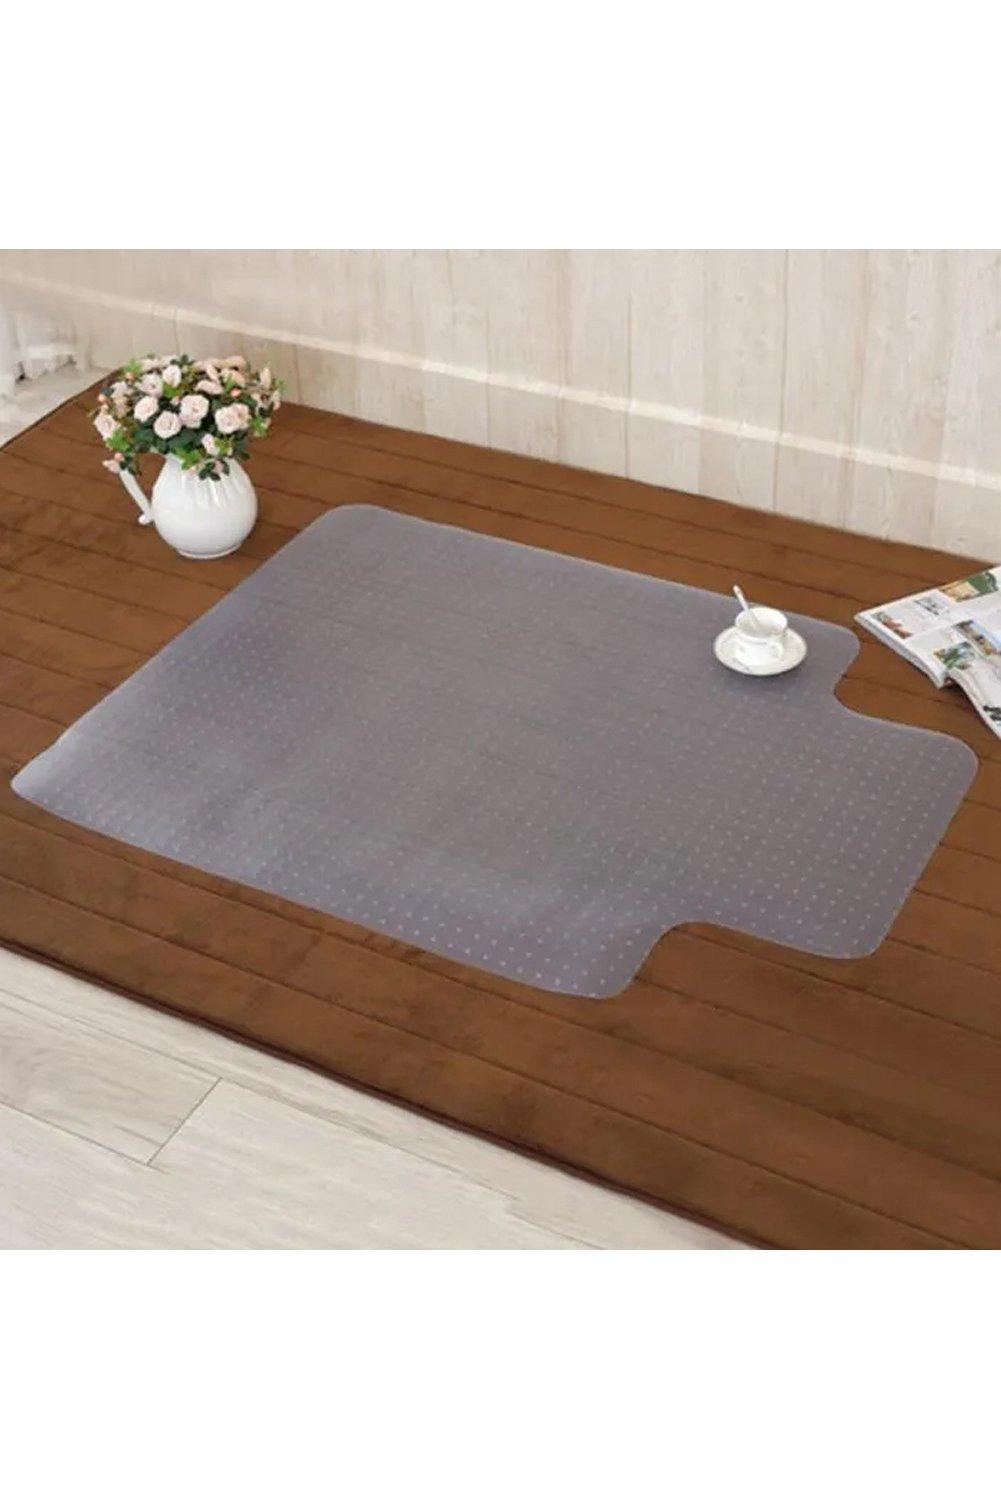 PVC Plastic Clear Non-Slip Office Chair Desk Mat Floor Carpet Floor Protector